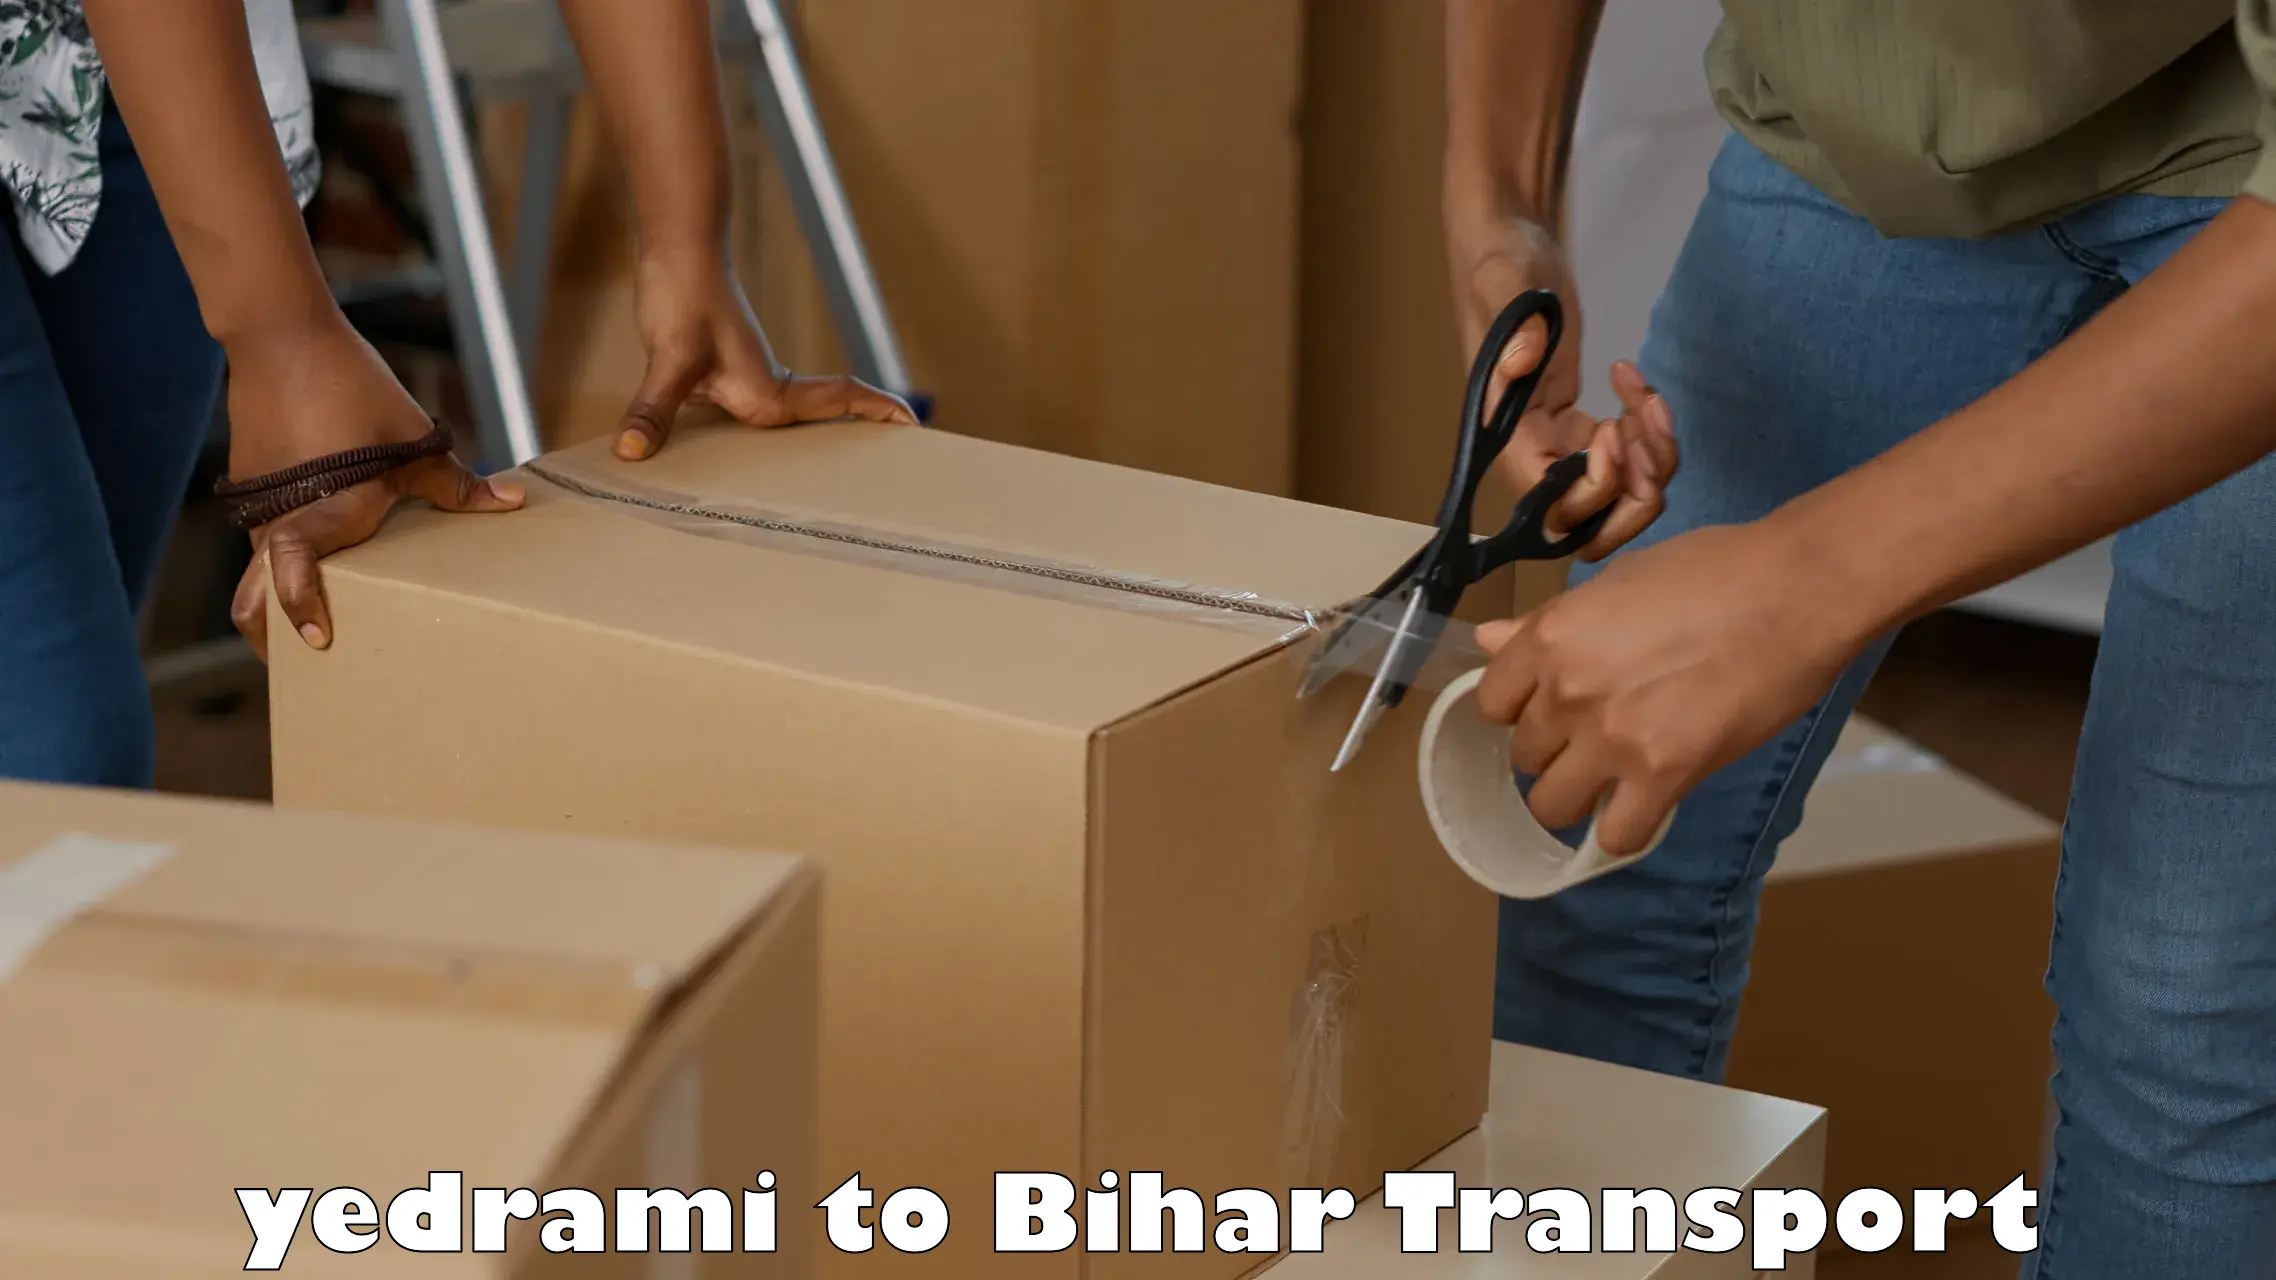 Transport in sharing yedrami to Katihar